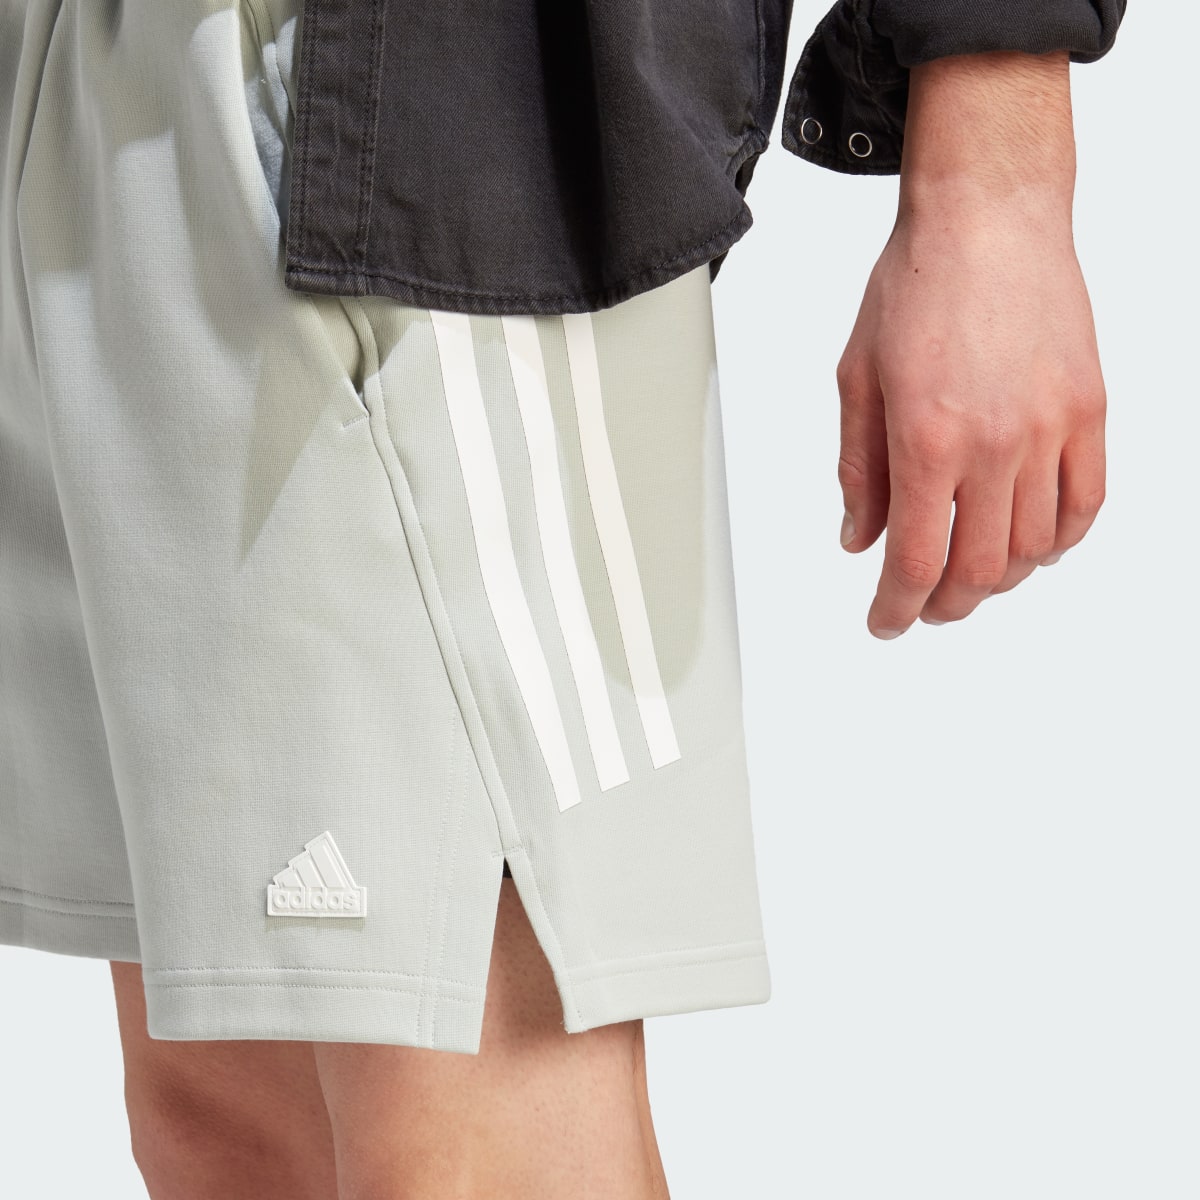 Adidas Future Icons 3-Stripes Shorts. 5